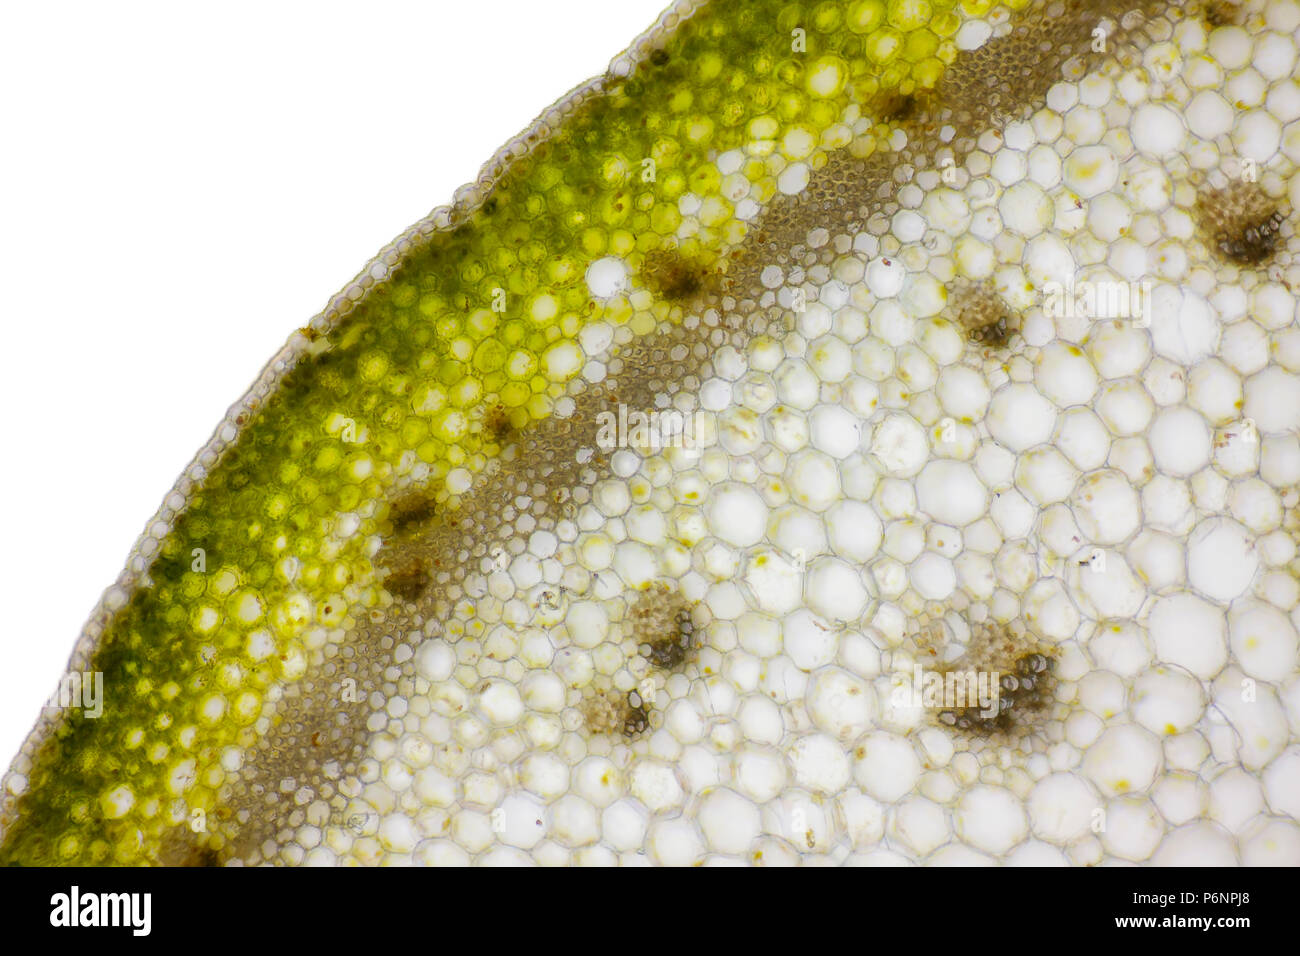 Microscopic view of Bearded iris (Iris x germanica) plant stem cross section. Brightfield illumination. Stock Photo